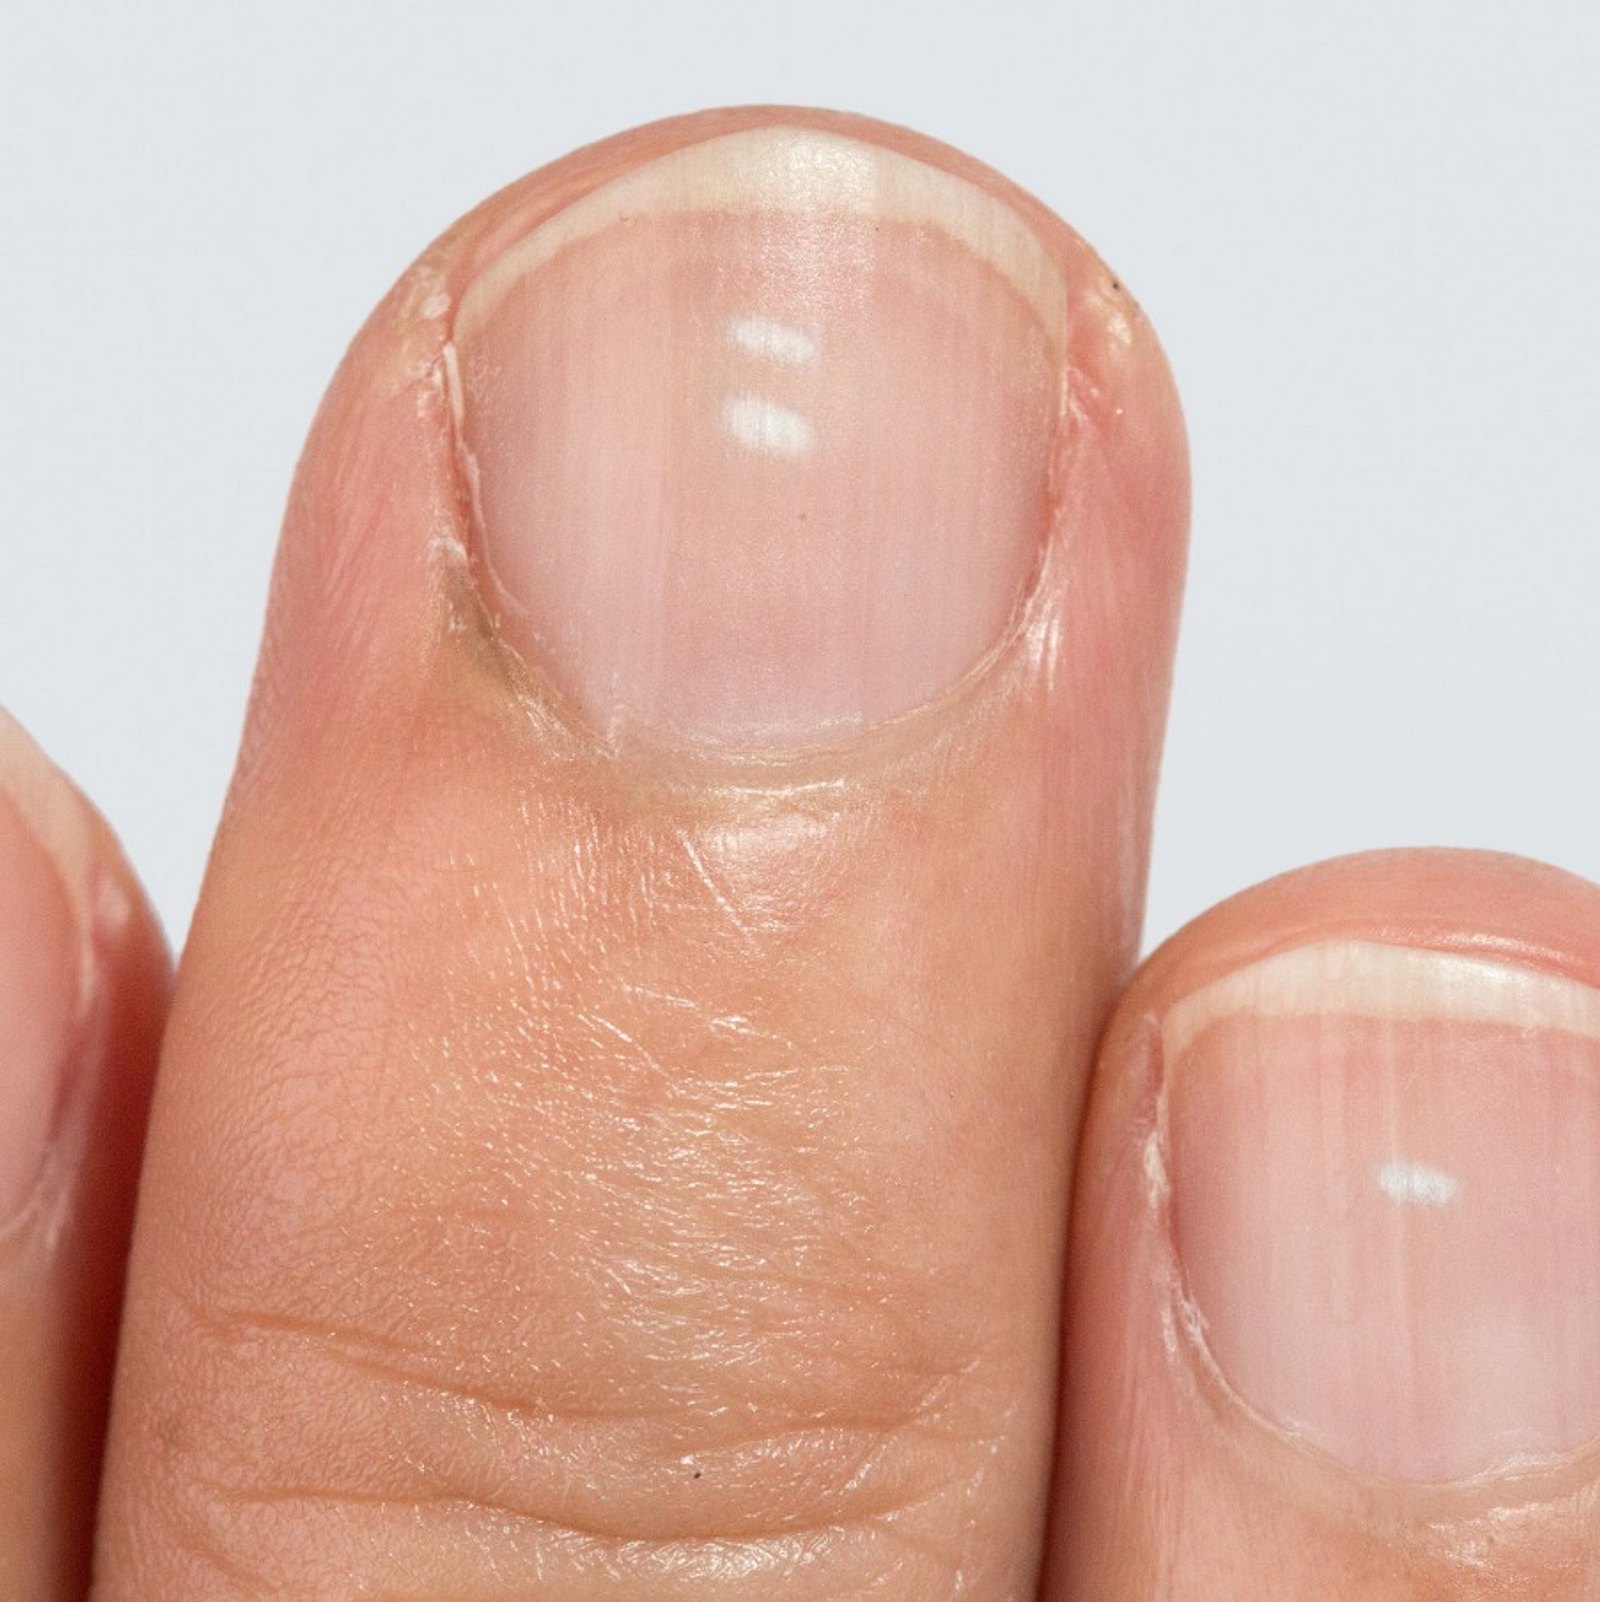 Почему полоски на ногтях рук